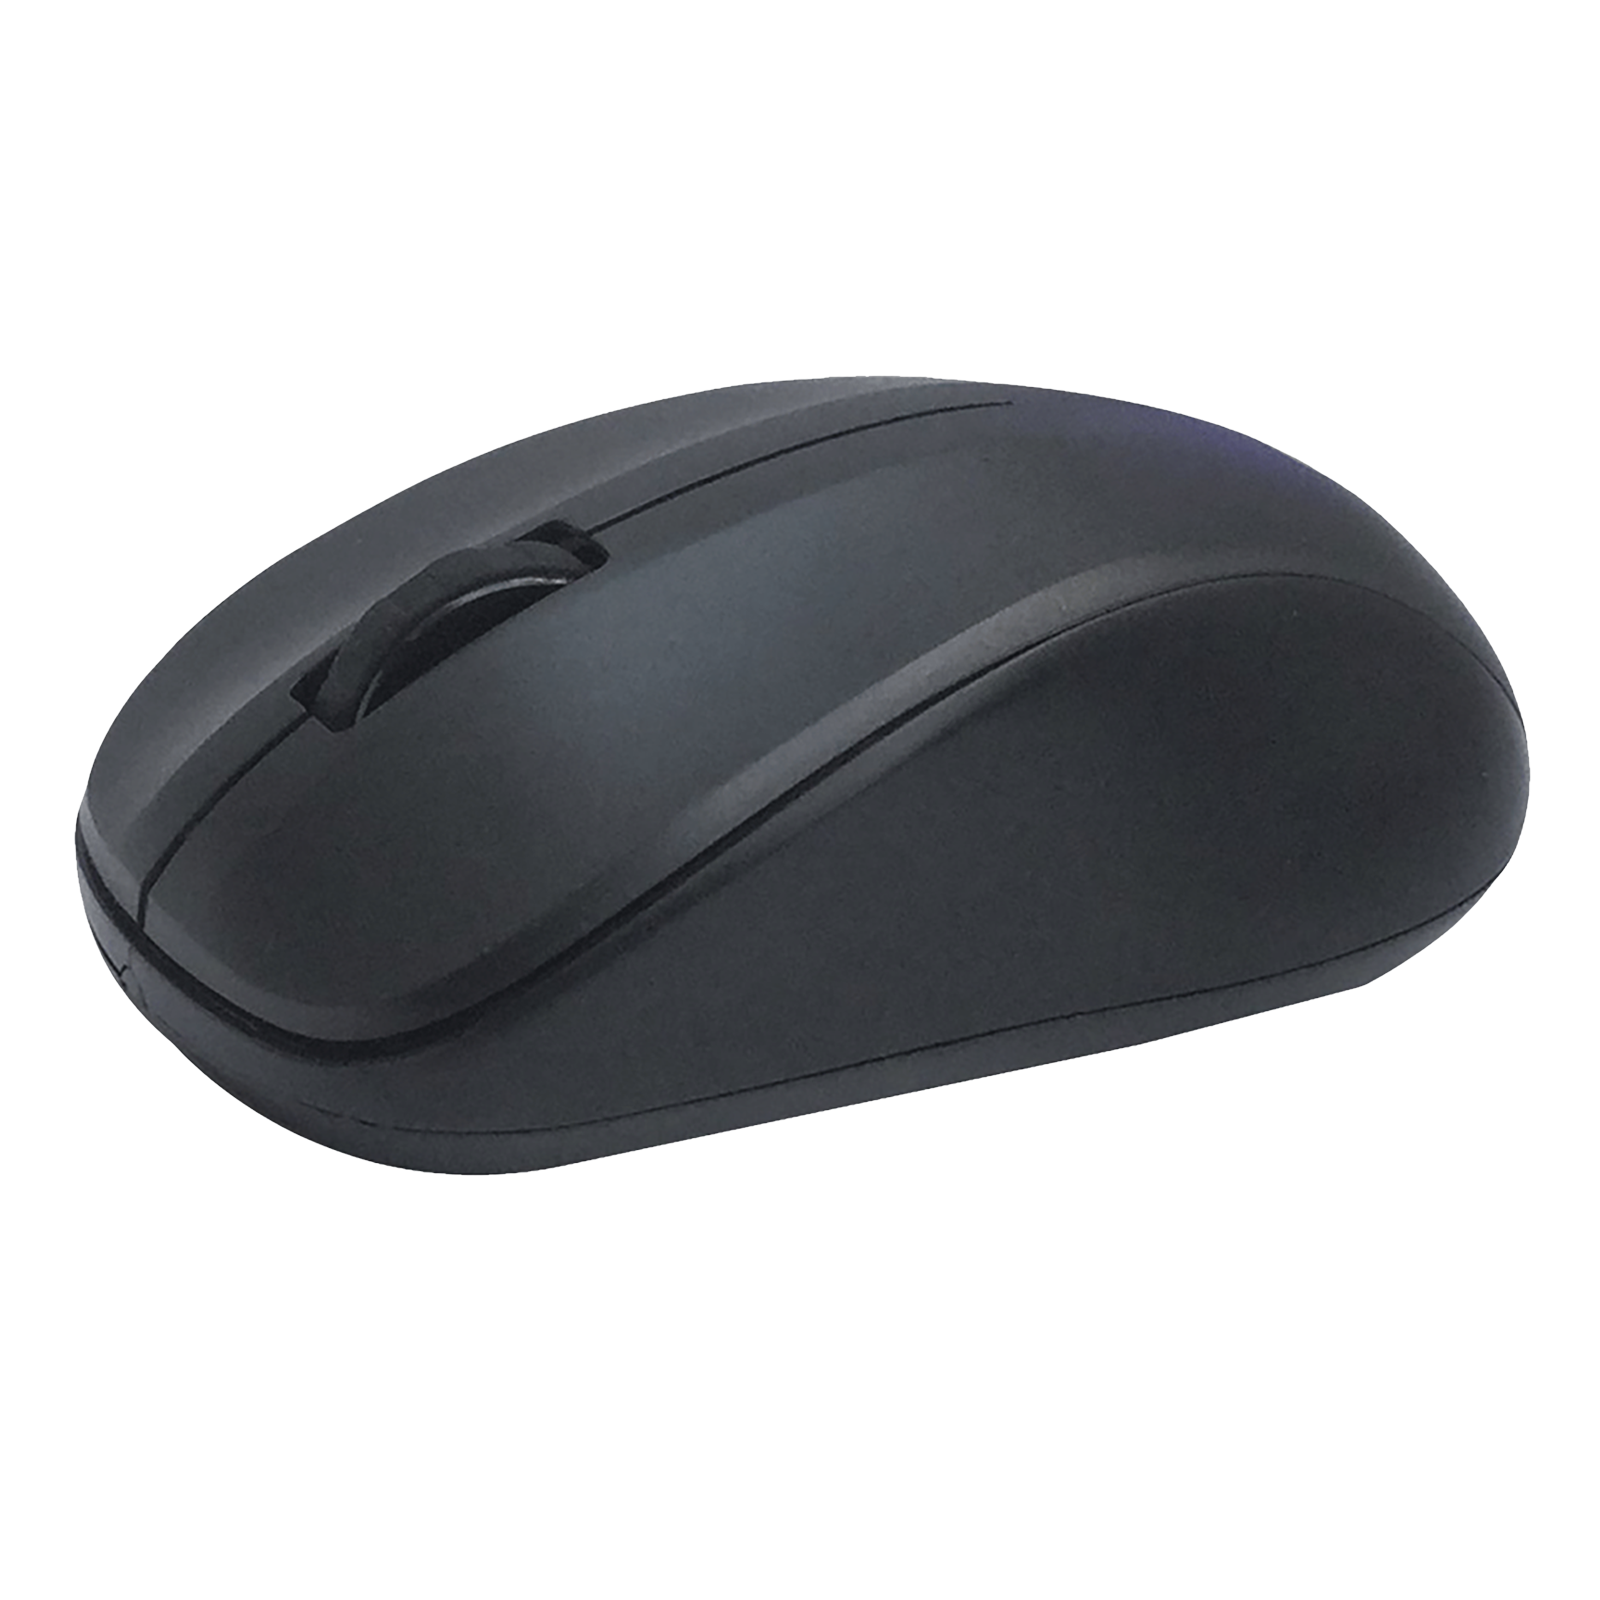 Buy HP M090 2.4GHz Wireless Optical Mouse with 1 Million Key Life (1200 DPI  Adjustable, Ergonomic Design, Black) Online - Croma